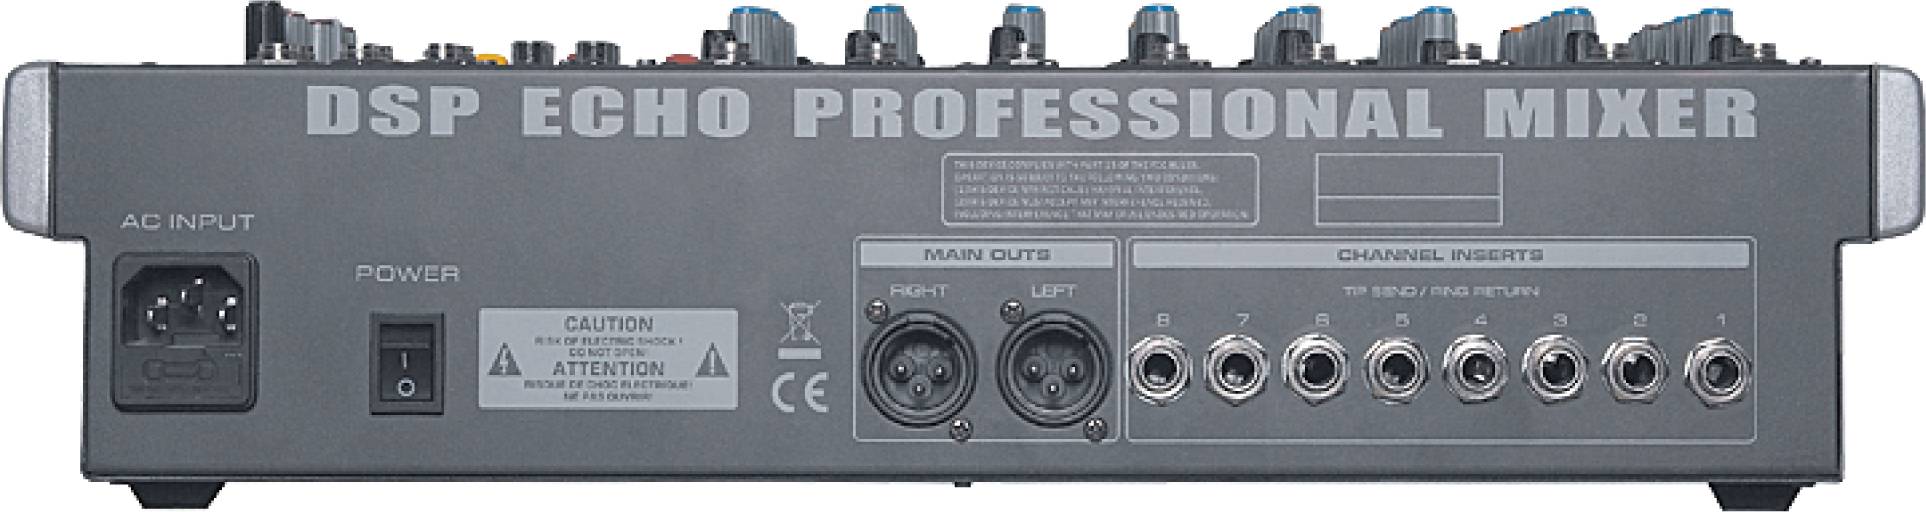 ST-816 ST-1216 Professional Mixer Console